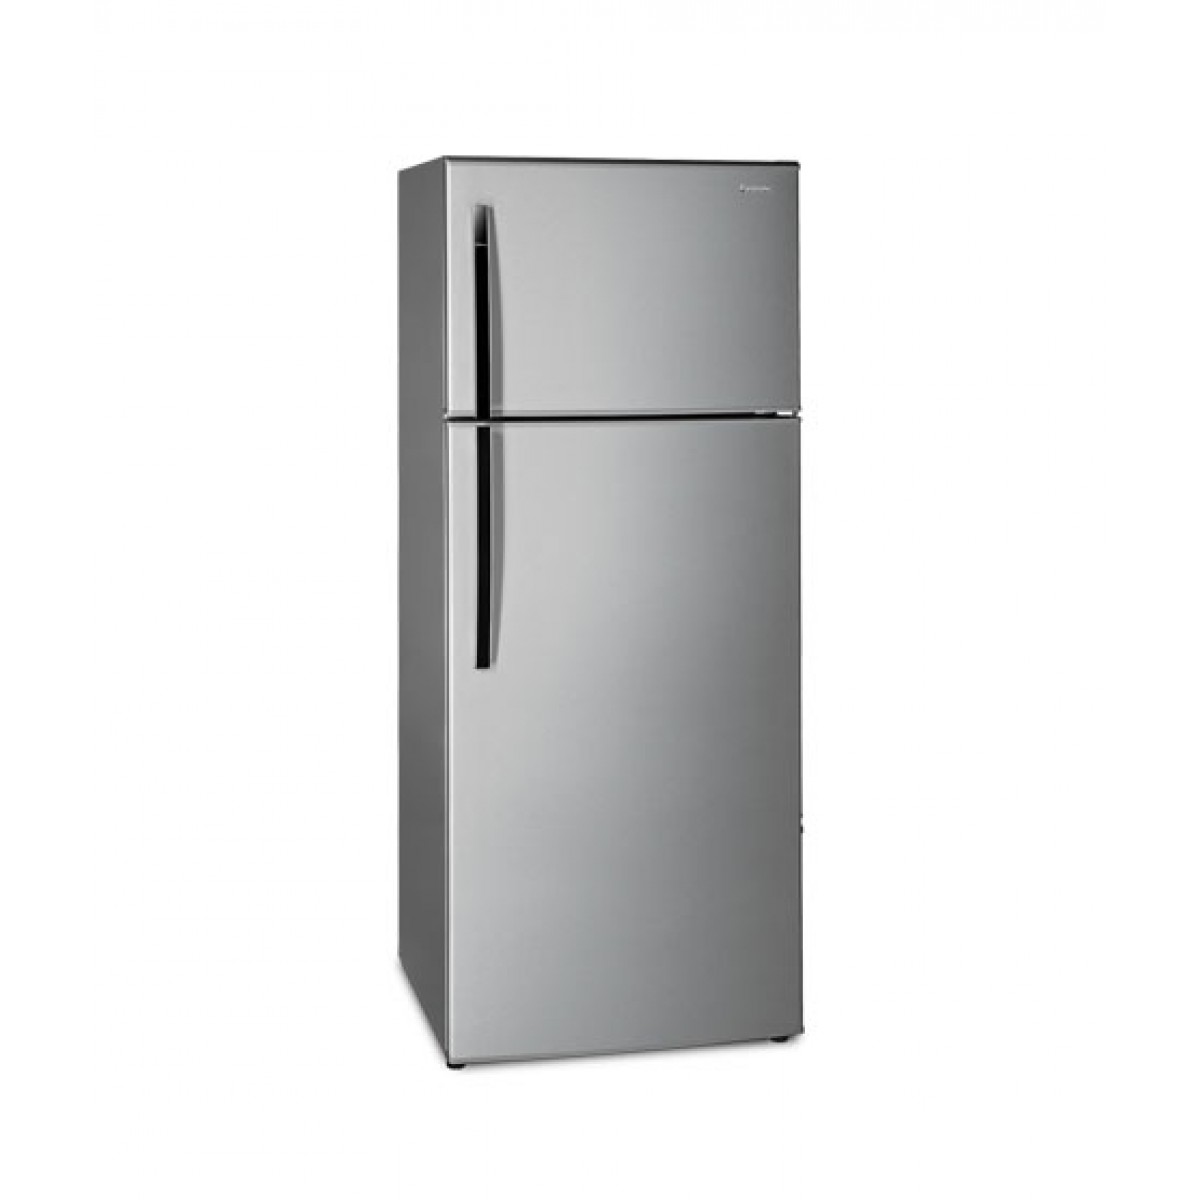 Топ холодильников цена качество 2024. Холодильник Panasonic Inverter. Холодильник Freezer & refregerator Nr-500. Холодильник Панасоник 2020. Холодильник Toshiba a33us.